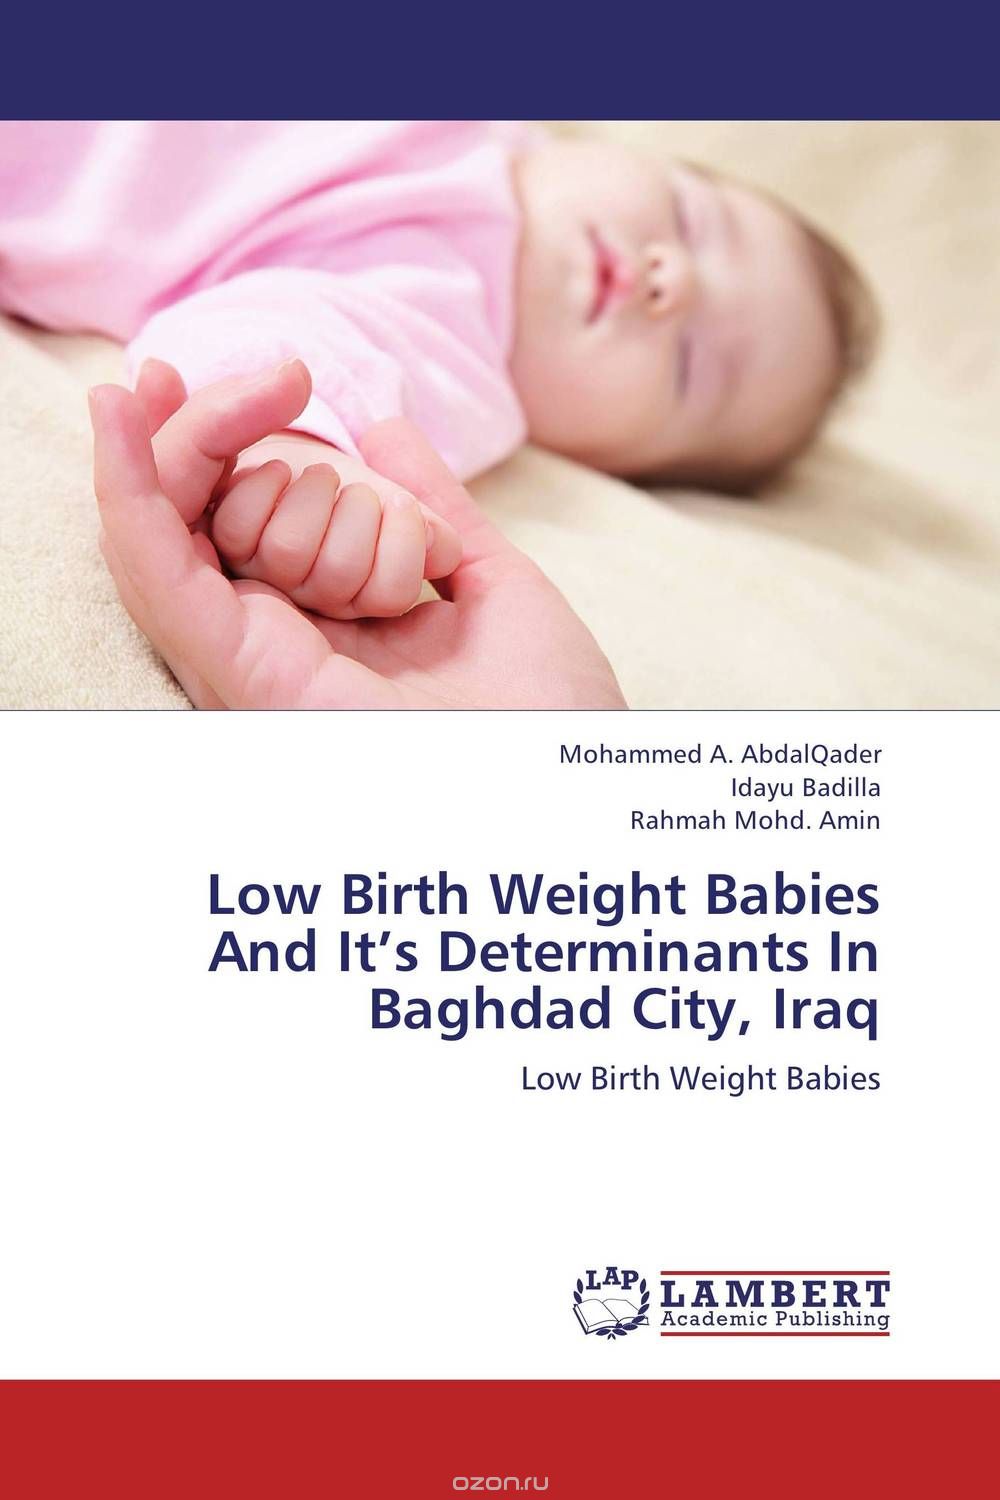 Скачать книгу "Low Birth Weight Babies And It’s Determinants In Baghdad City, Iraq"